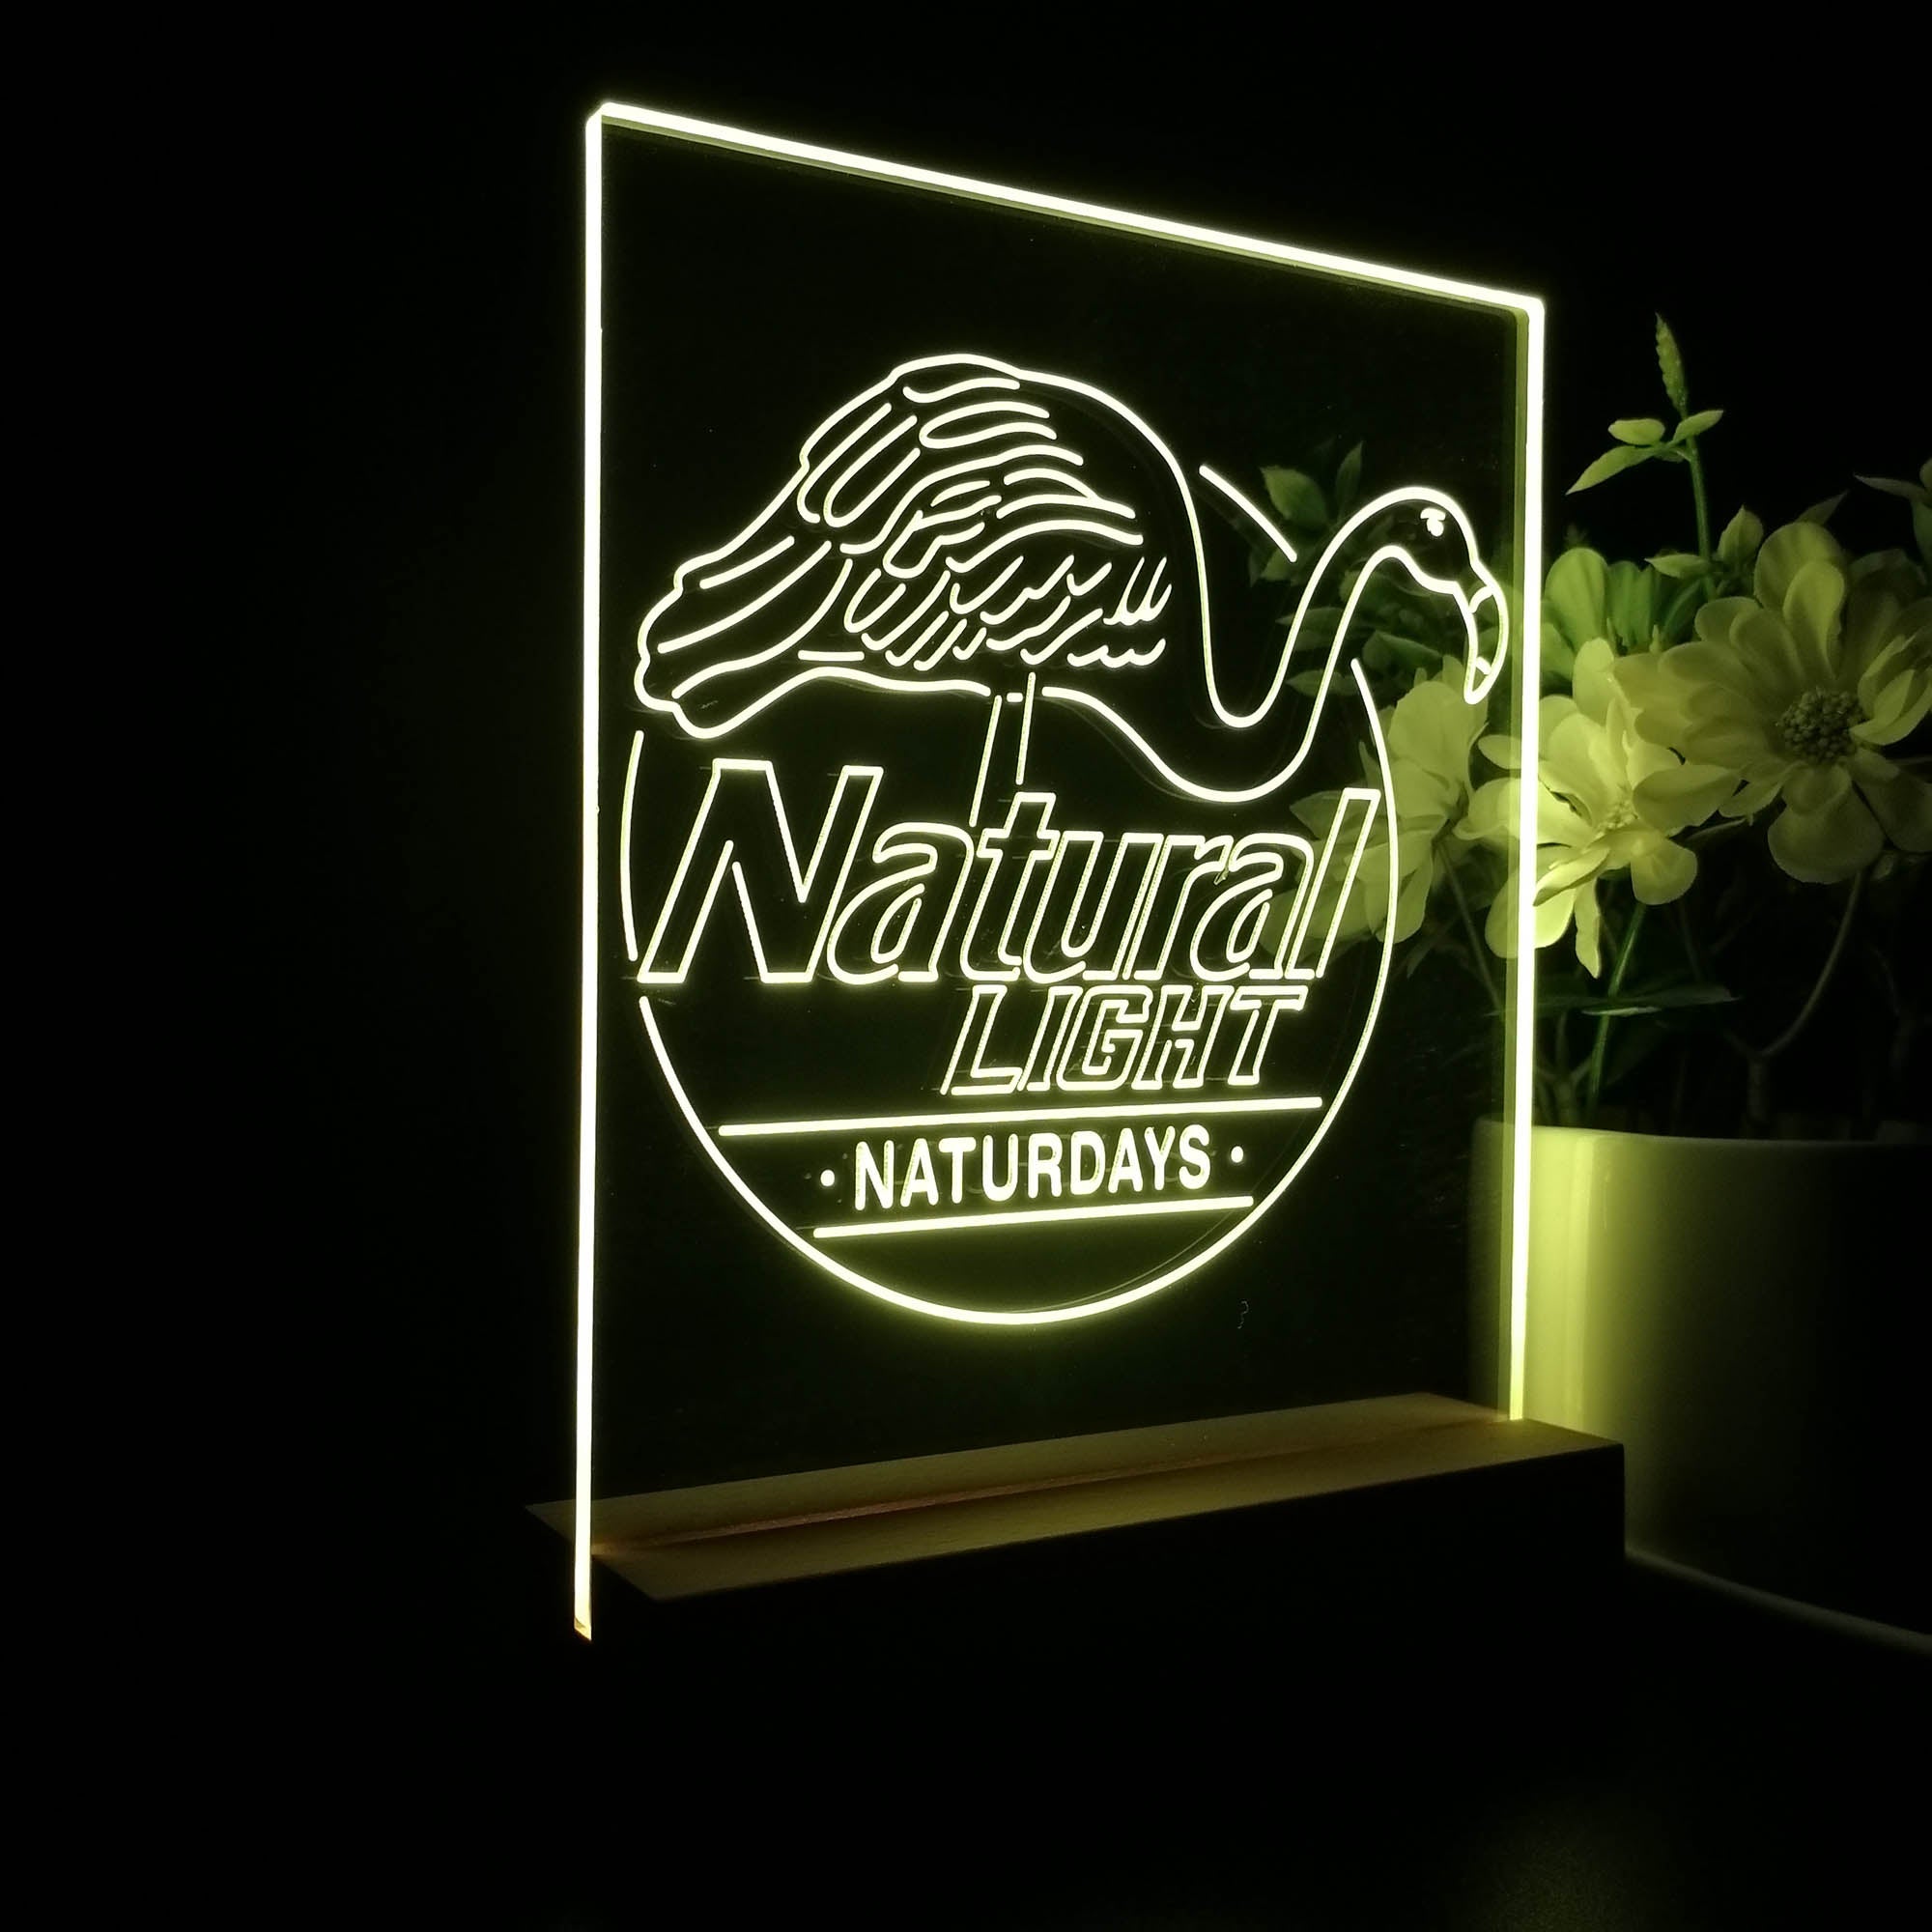 Natural Light Naturdays Night Light LED Sign